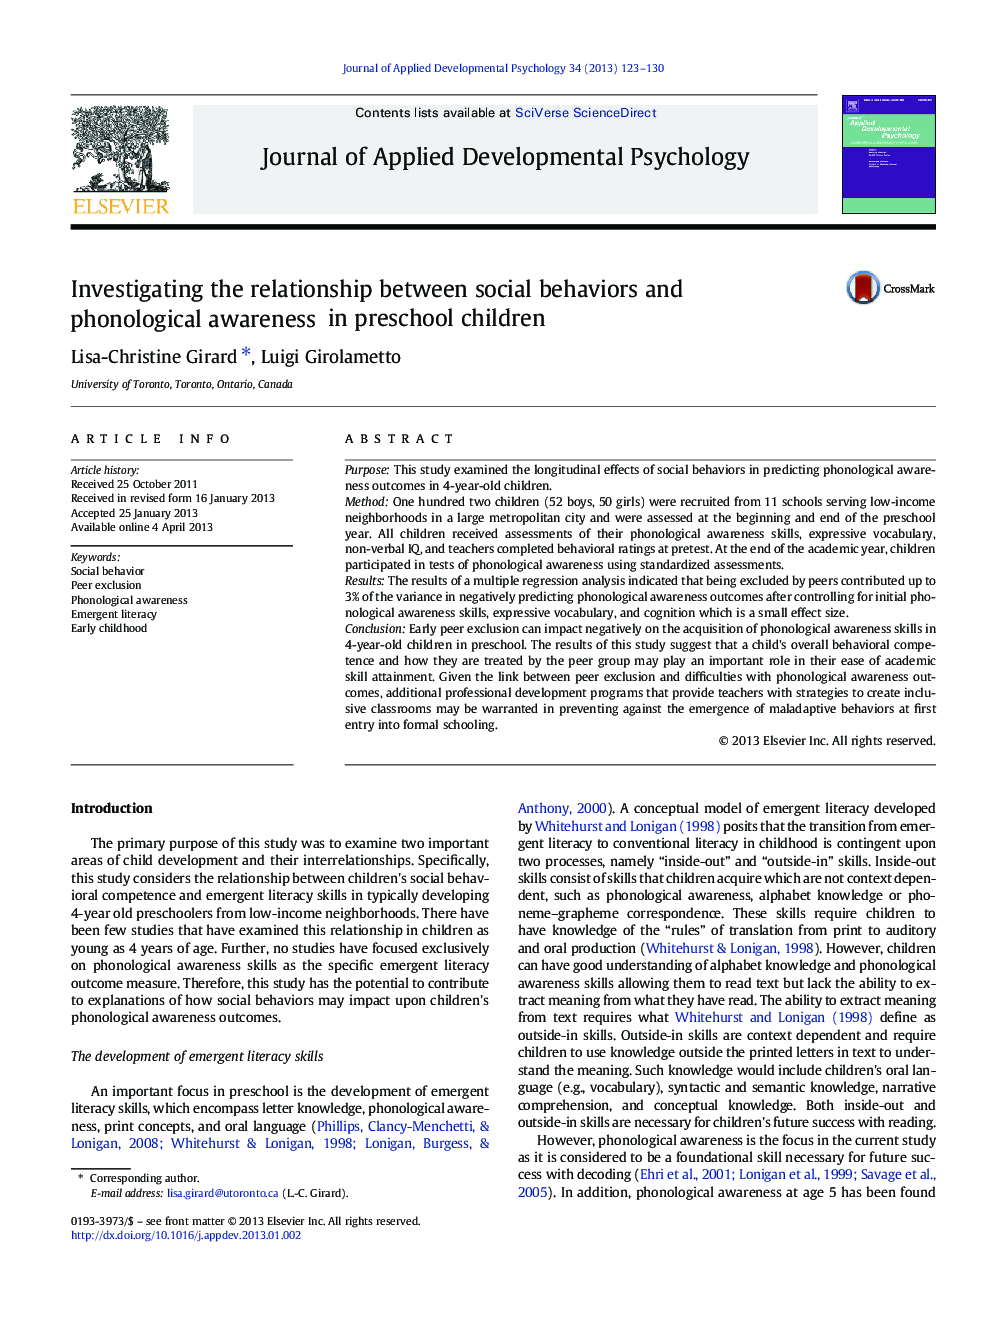 Investigating the relationship between social behaviors and phonological awareness in preschool children